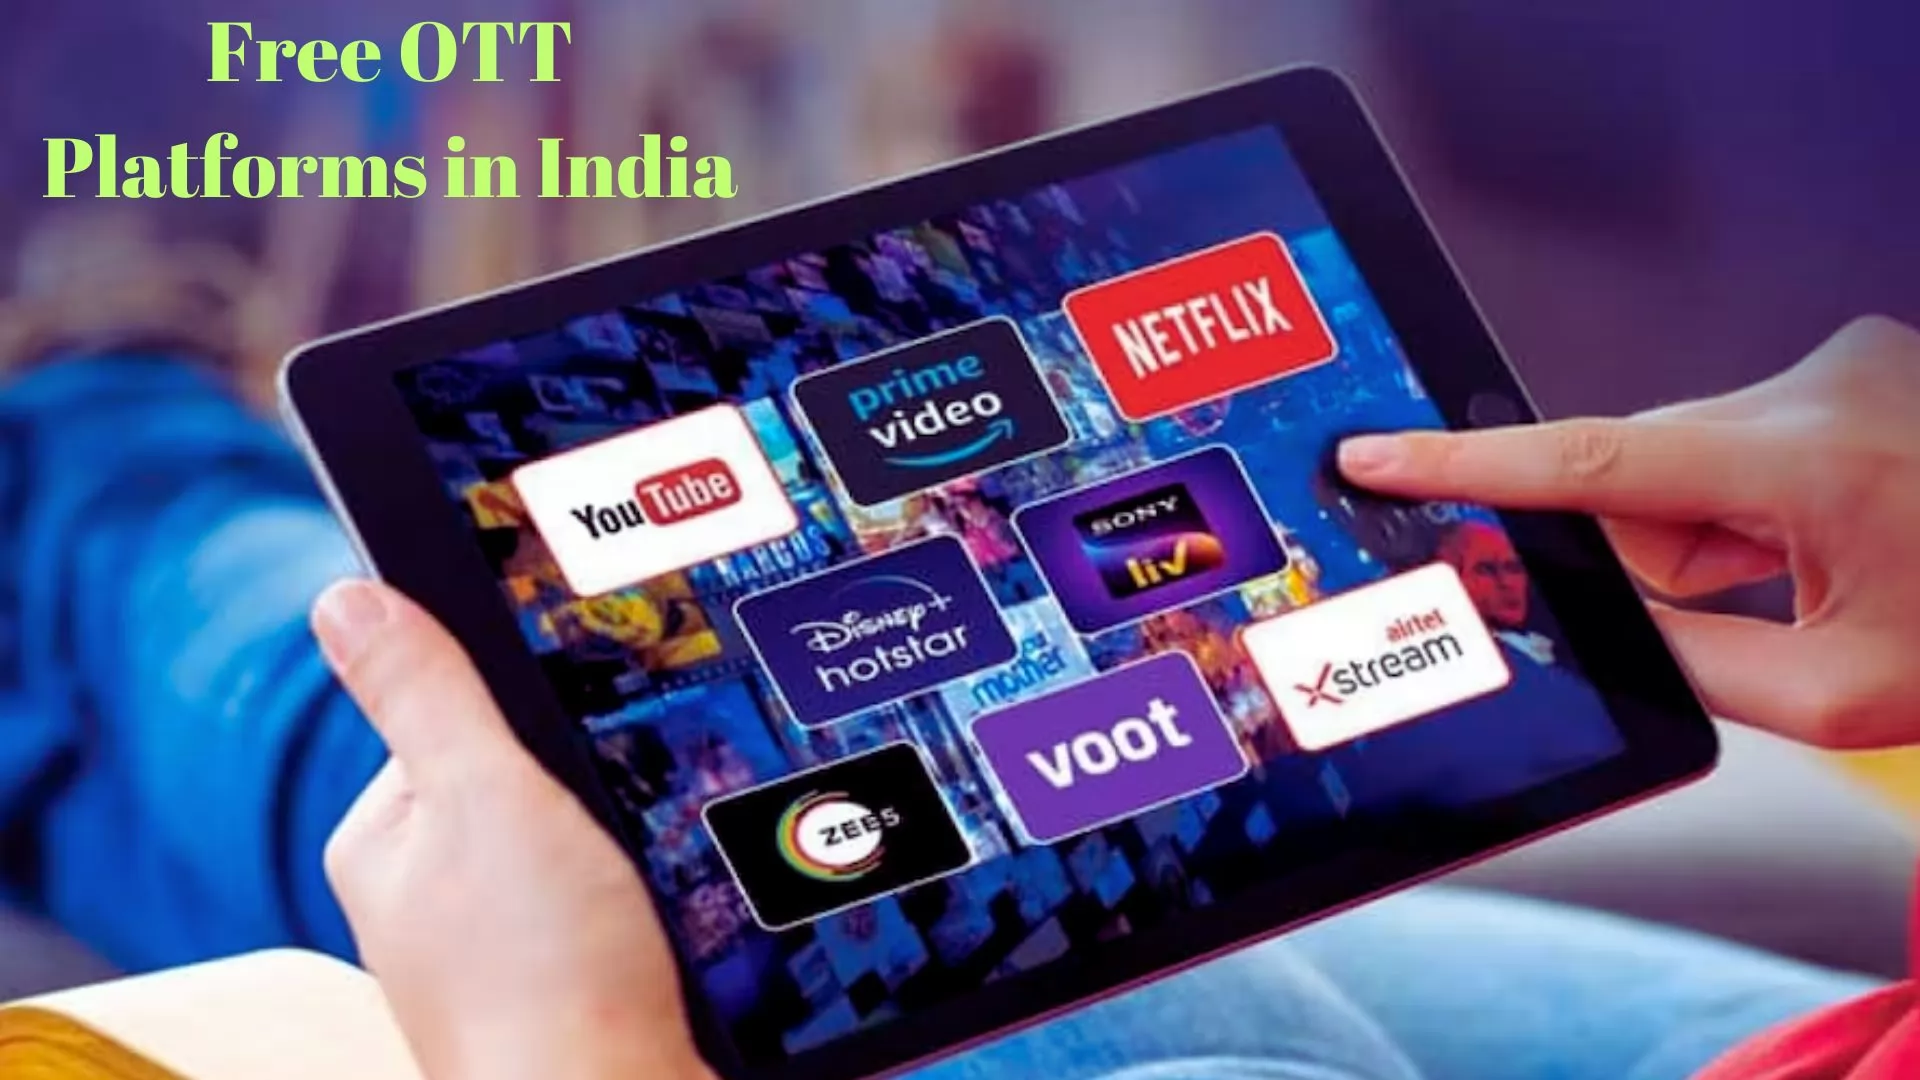 Free OTT Platforms in India